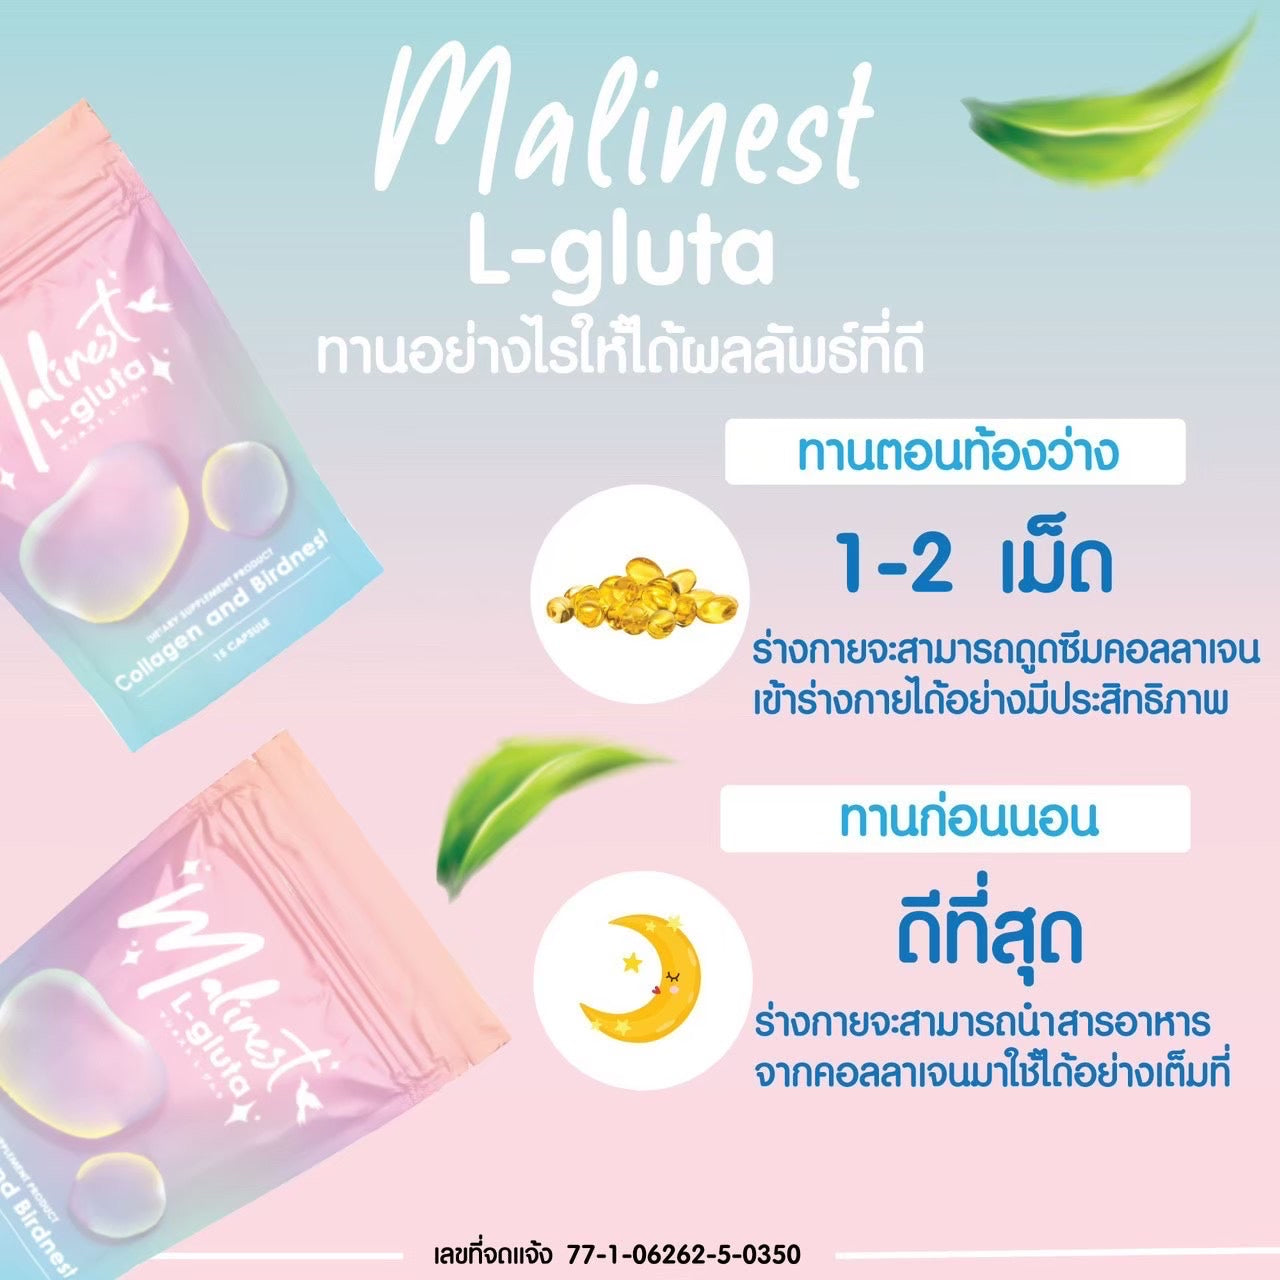 Malinest L Gluta-Softgel 15 Capsules